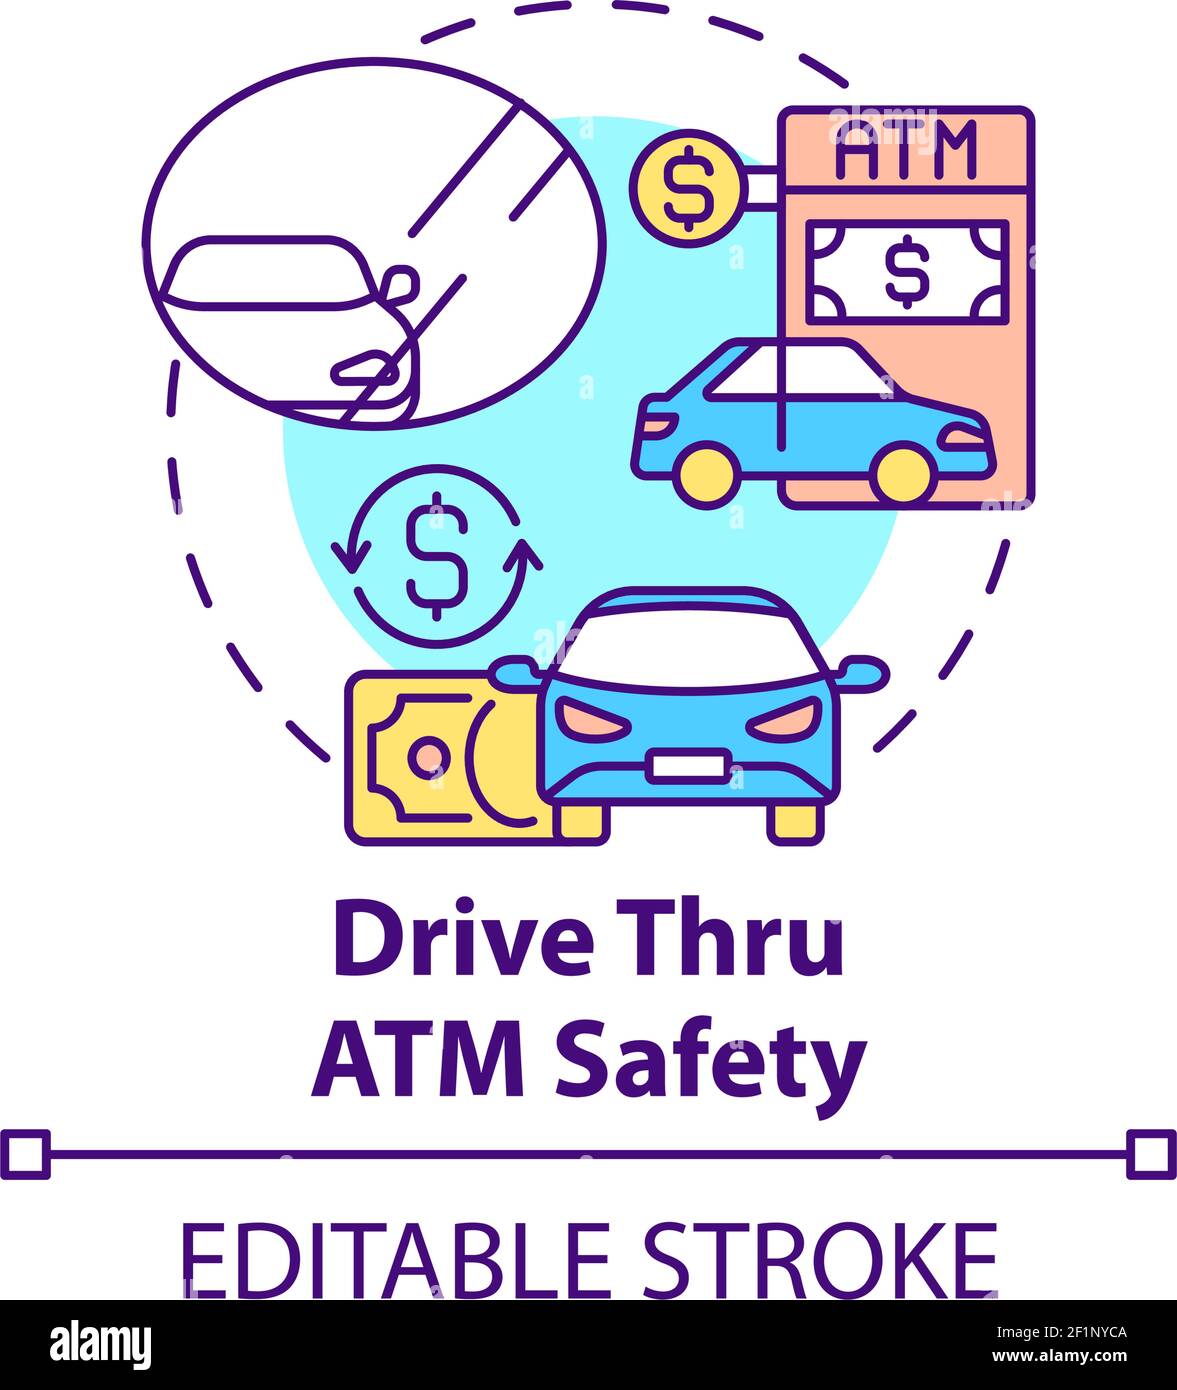 Drive thru ATM safety concept icon Stock Vector